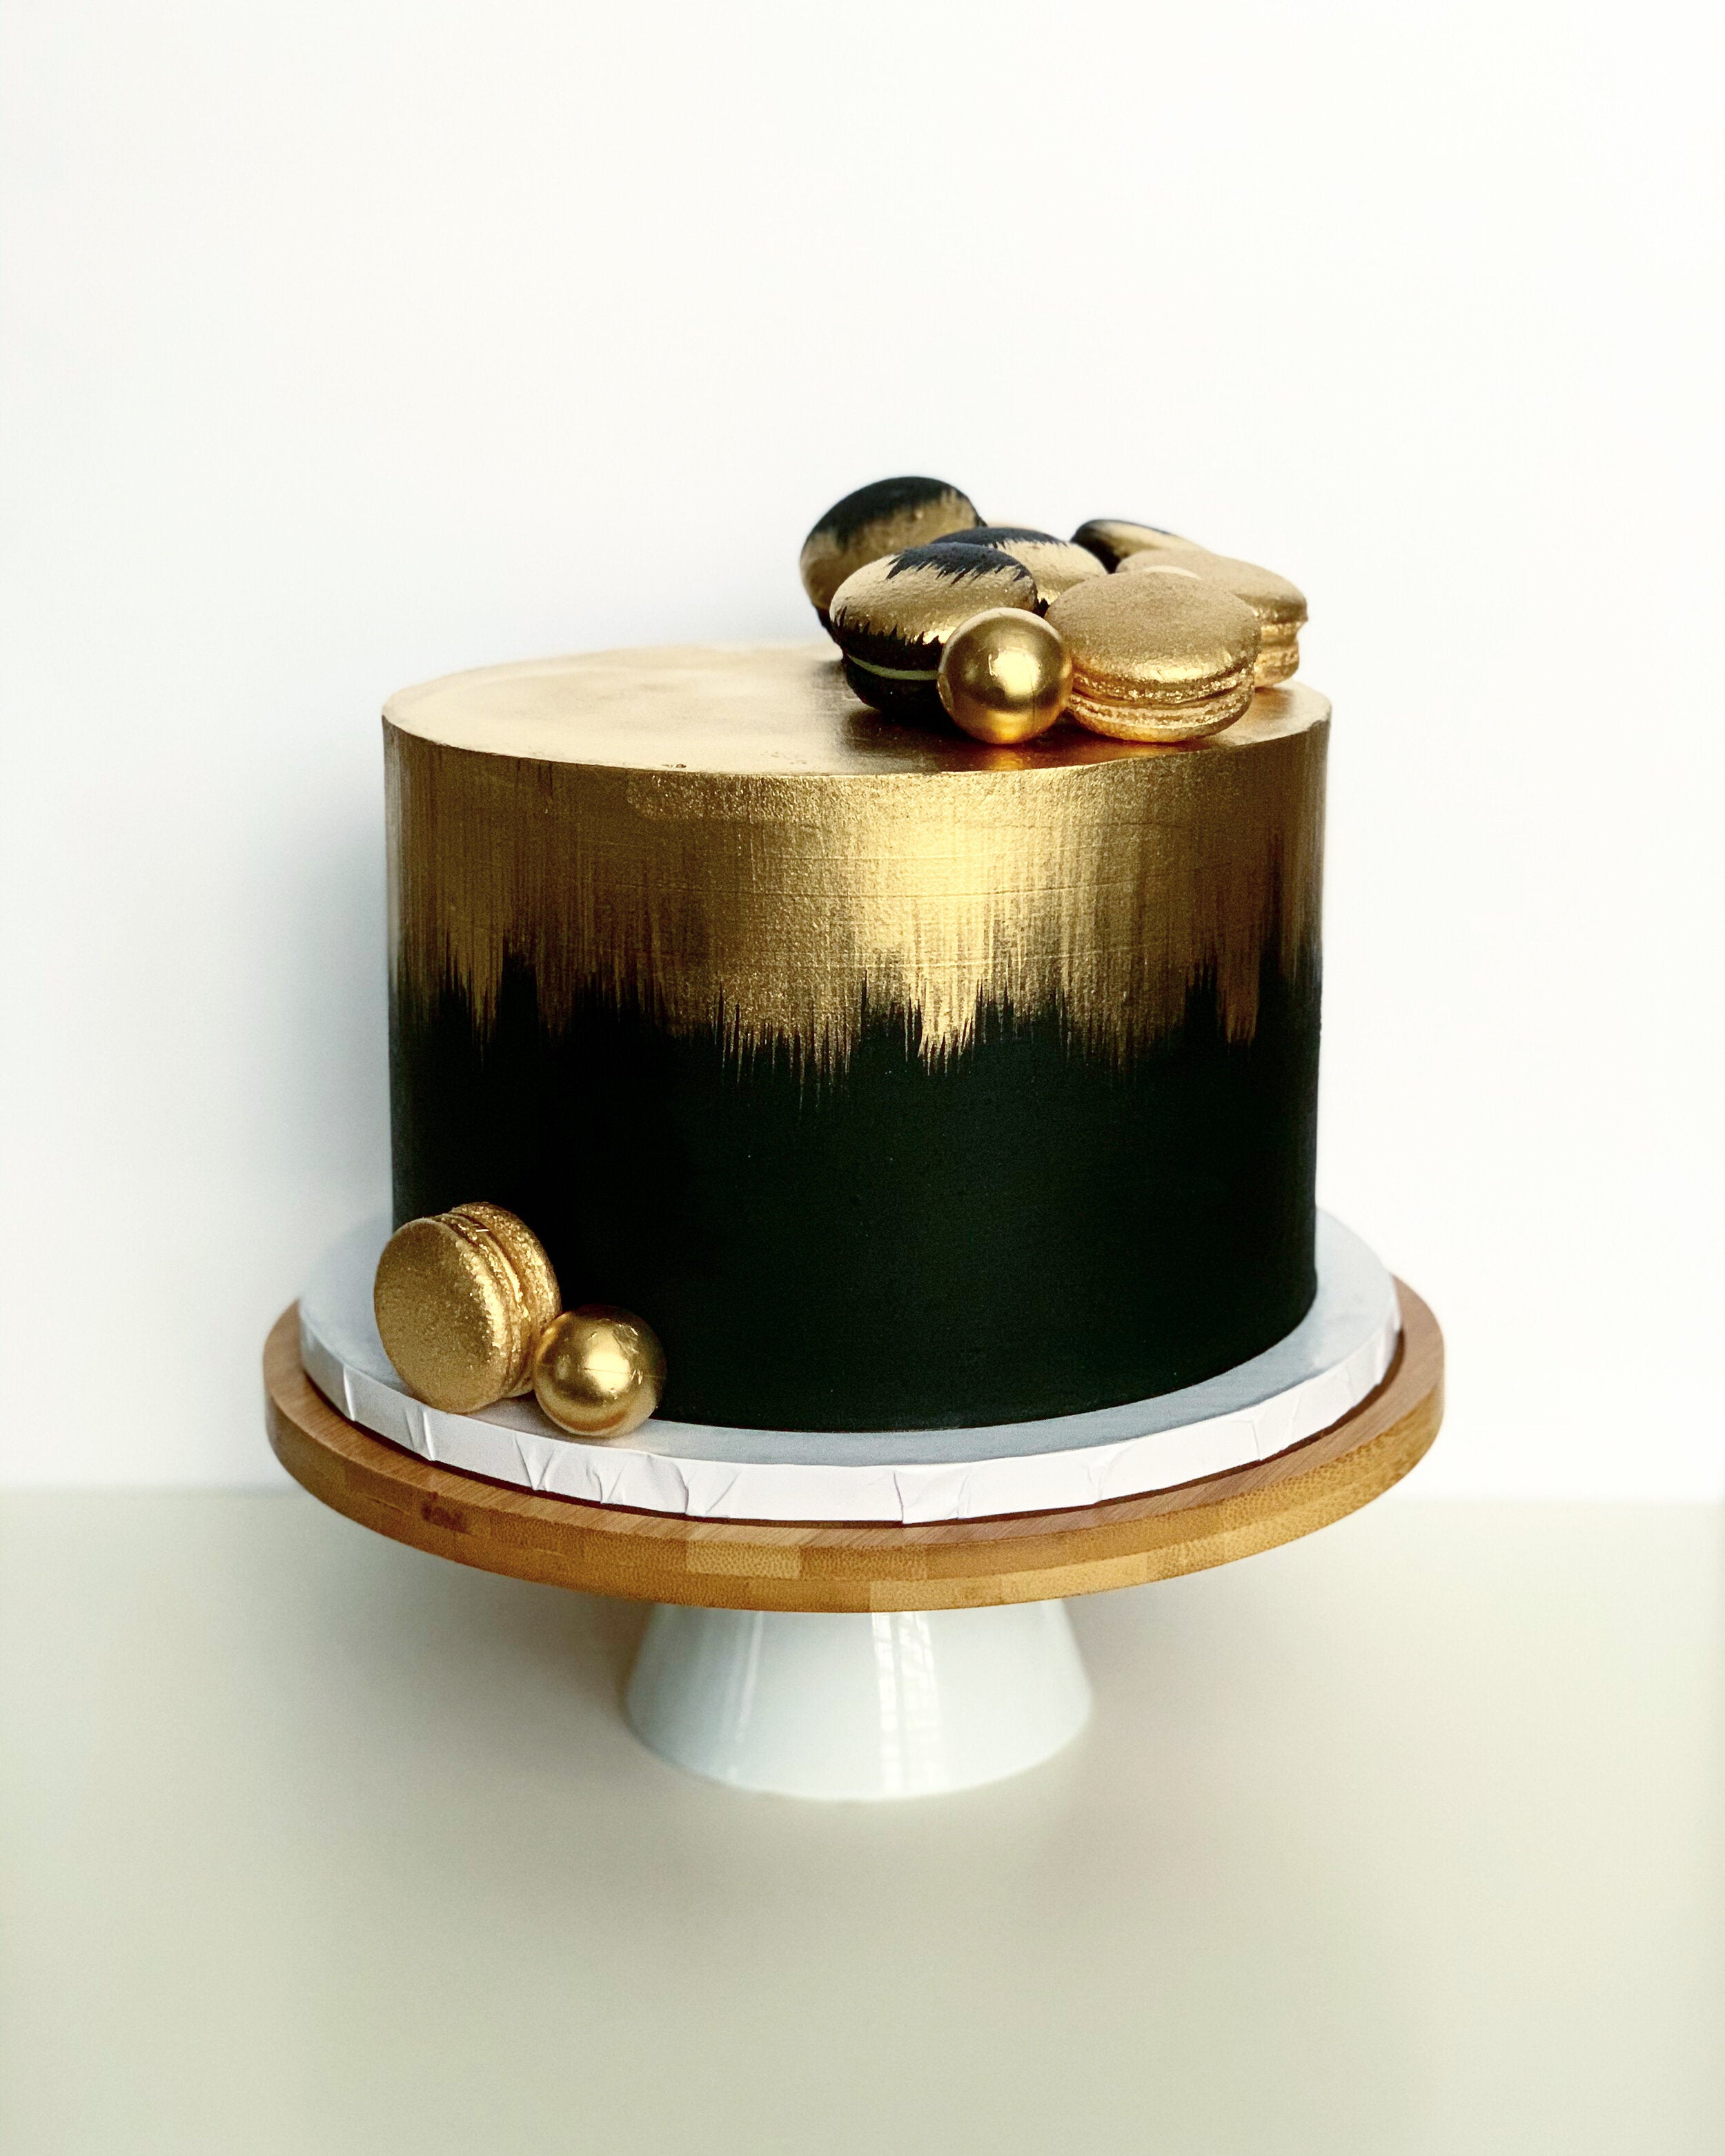 A simple single tier wedding cake. I... - Millie's Kitchen | Facebook